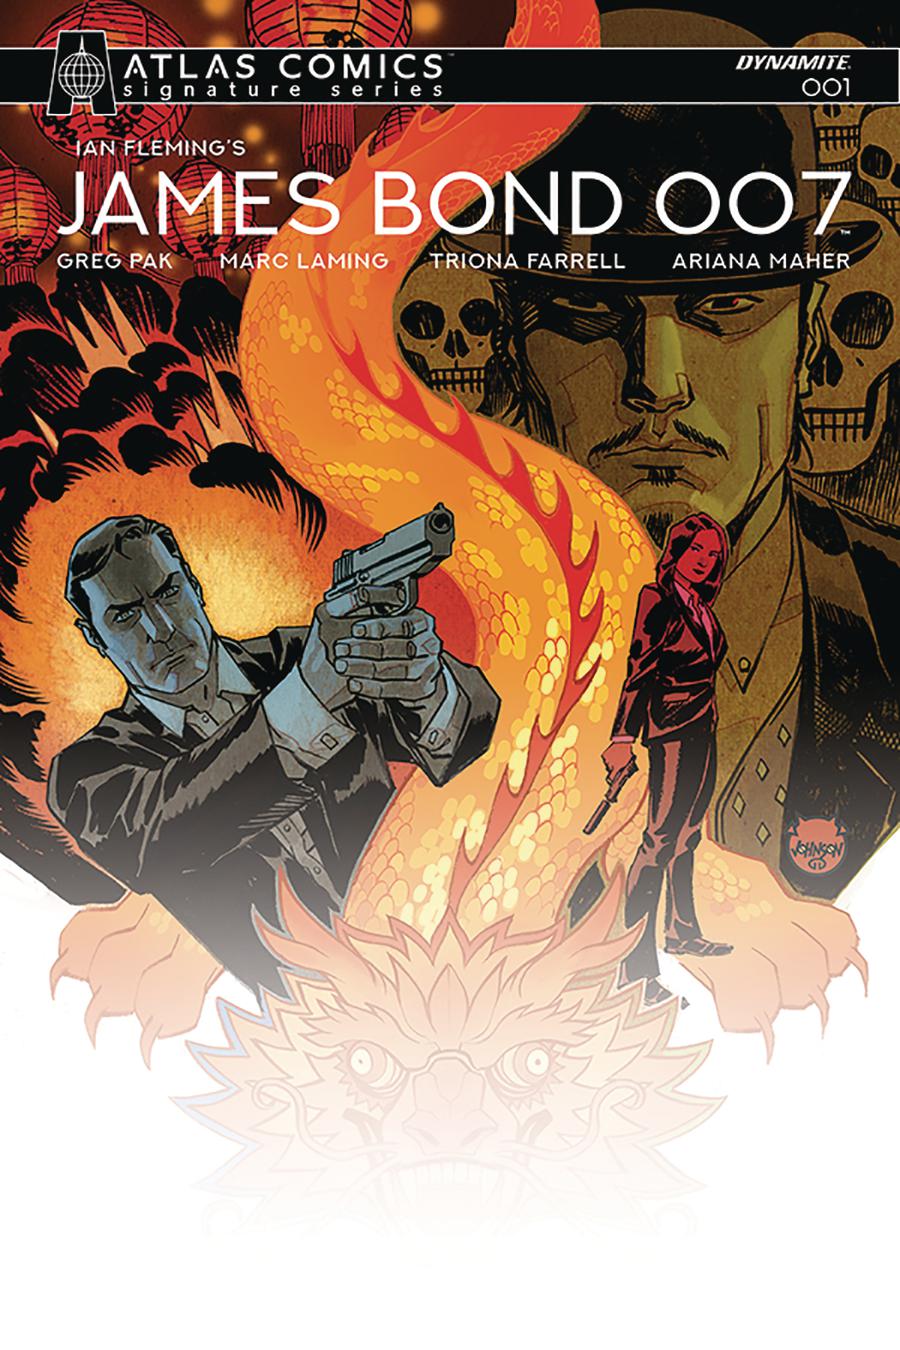 James Bond 007 #1 Cover J Atlas Comics Signature Series Signed By Greg Pak